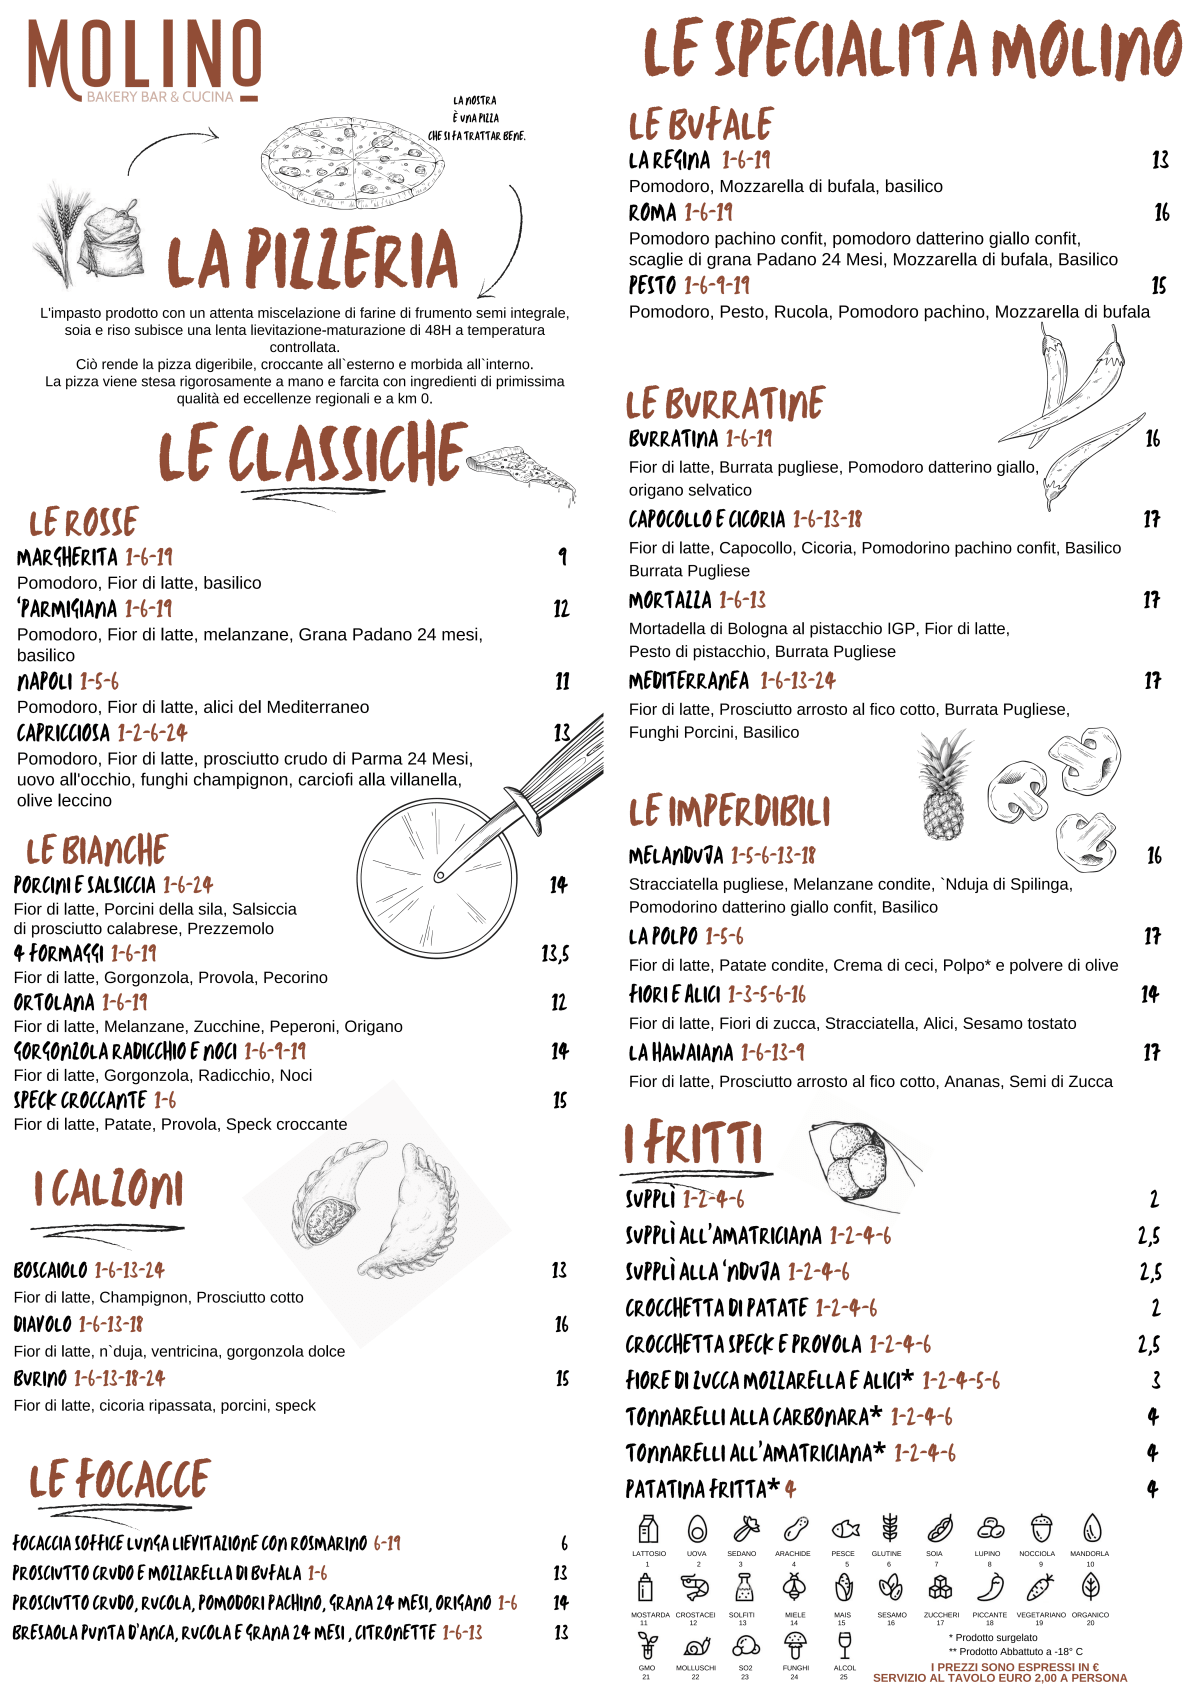 Molino via Appia menu